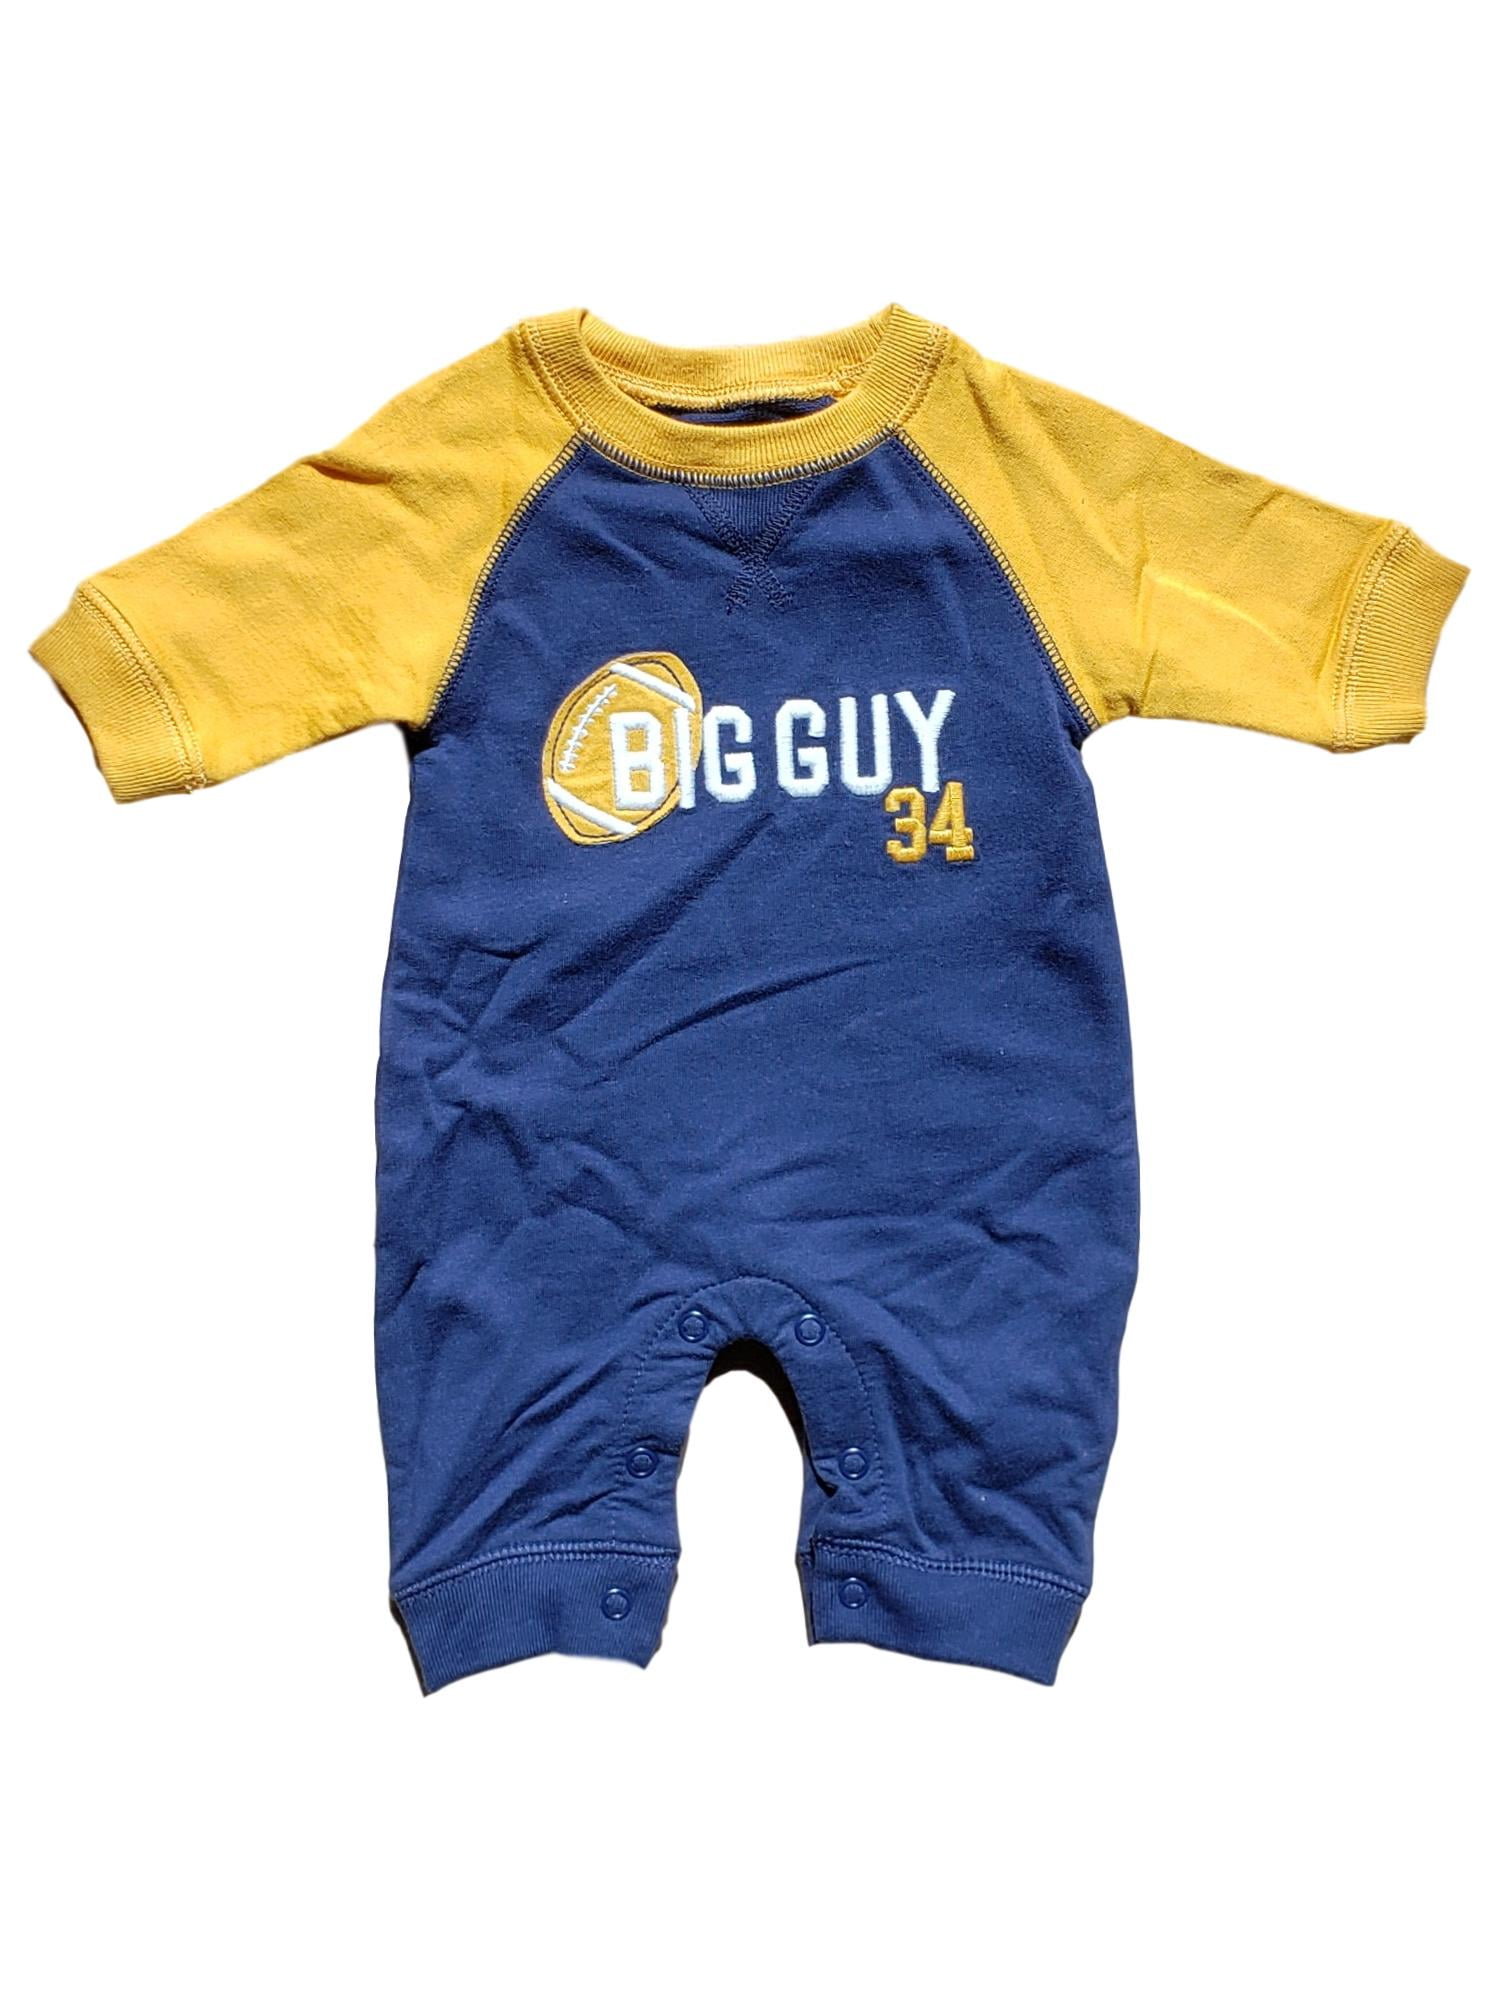 Carter's Carters Infant Baby Boys Blue & Gold Big Guy Football Cotton Romper Jumpsuit